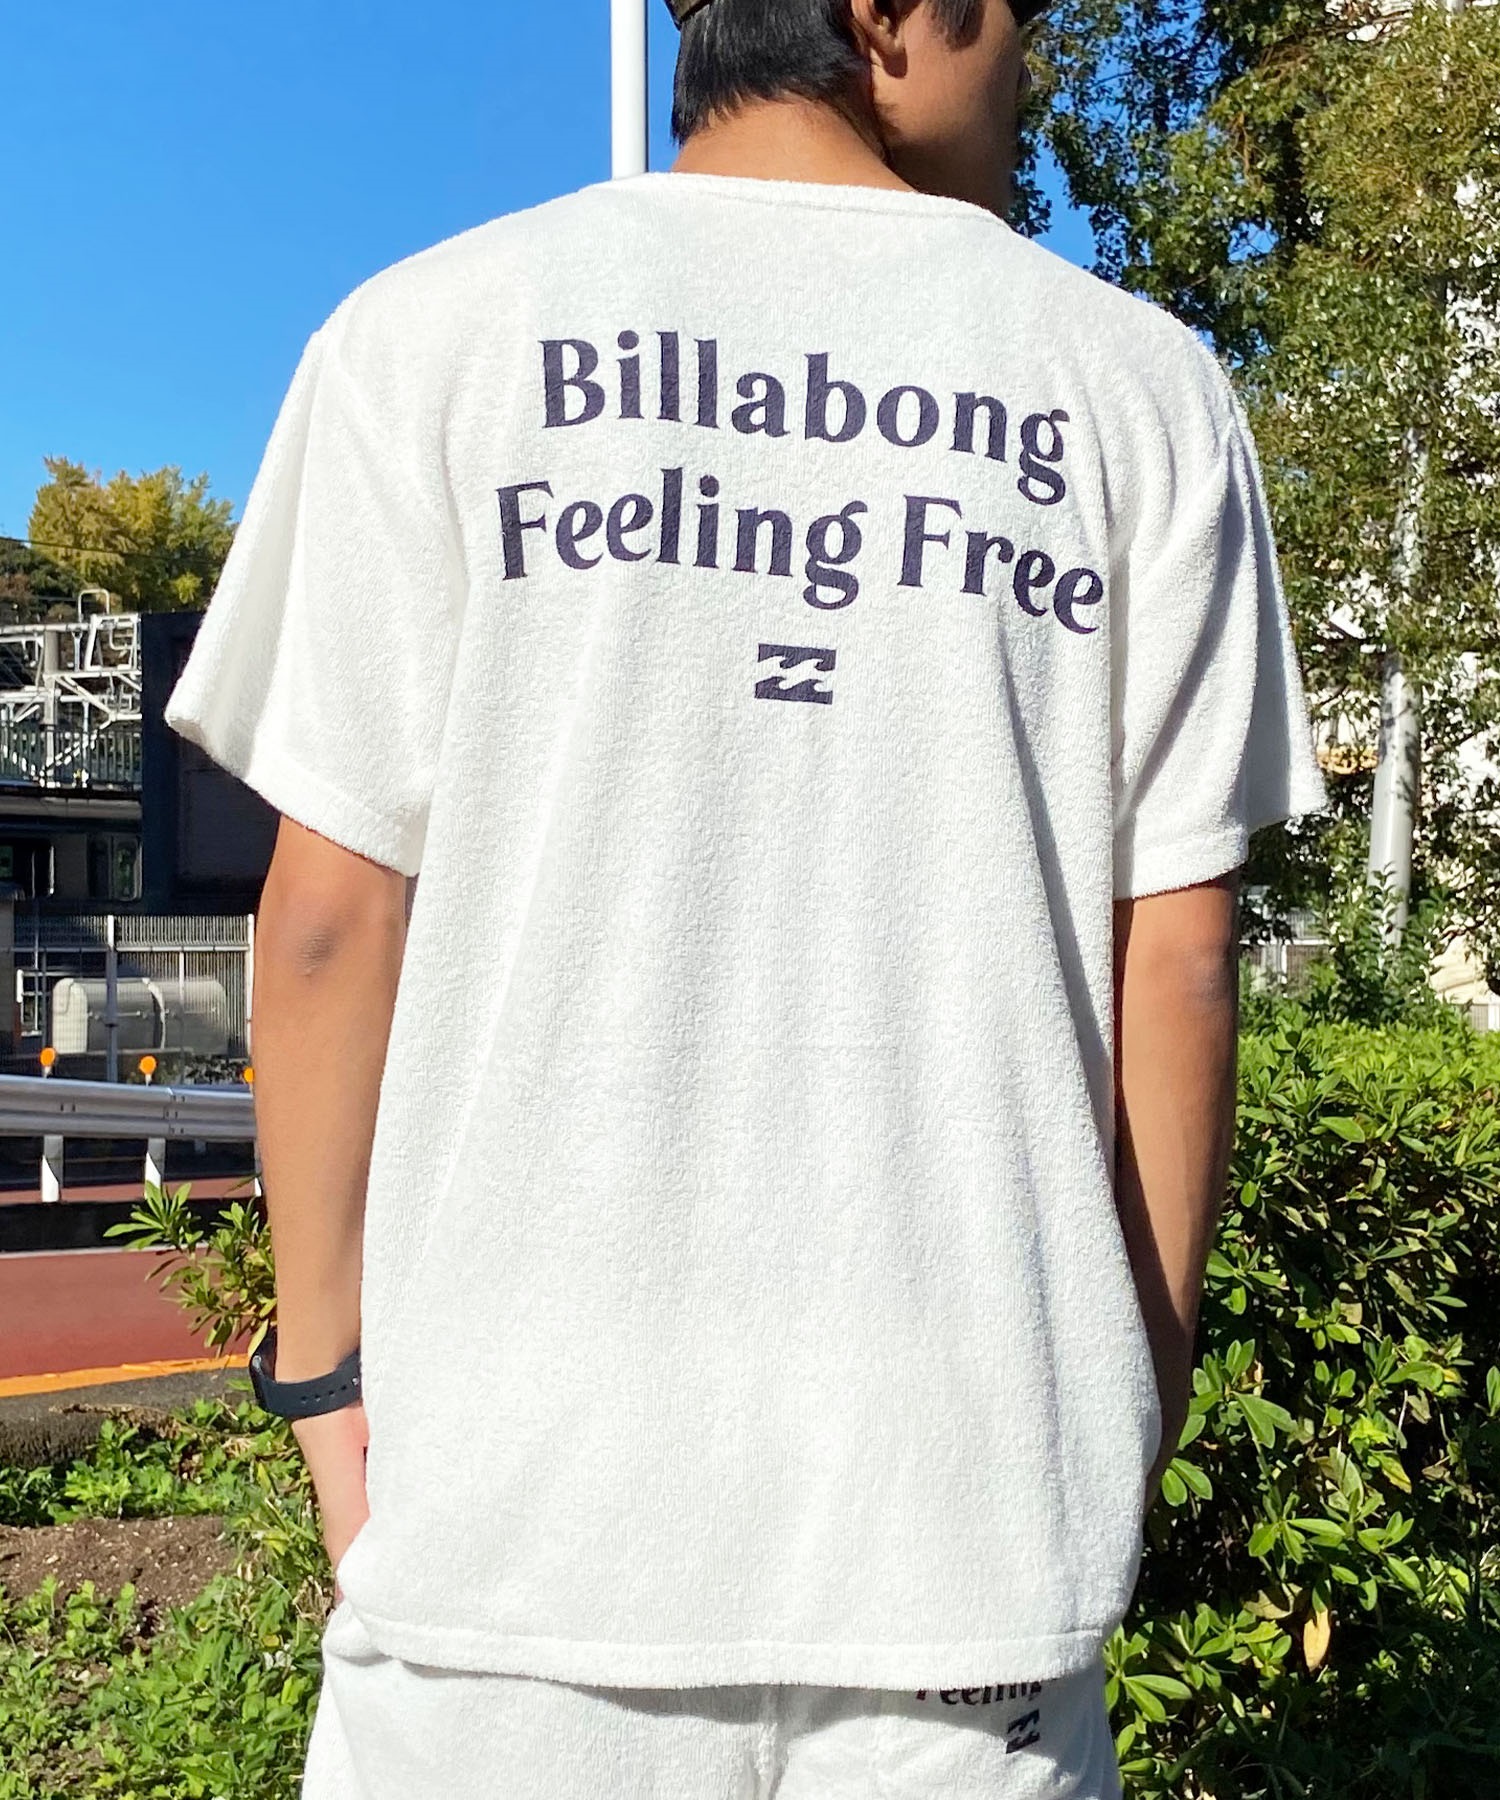 BILLABONG ビラボン メンズ 半袖 Tシャツ パイル生地 セットアップ対応 BE011-303(OFW-M)